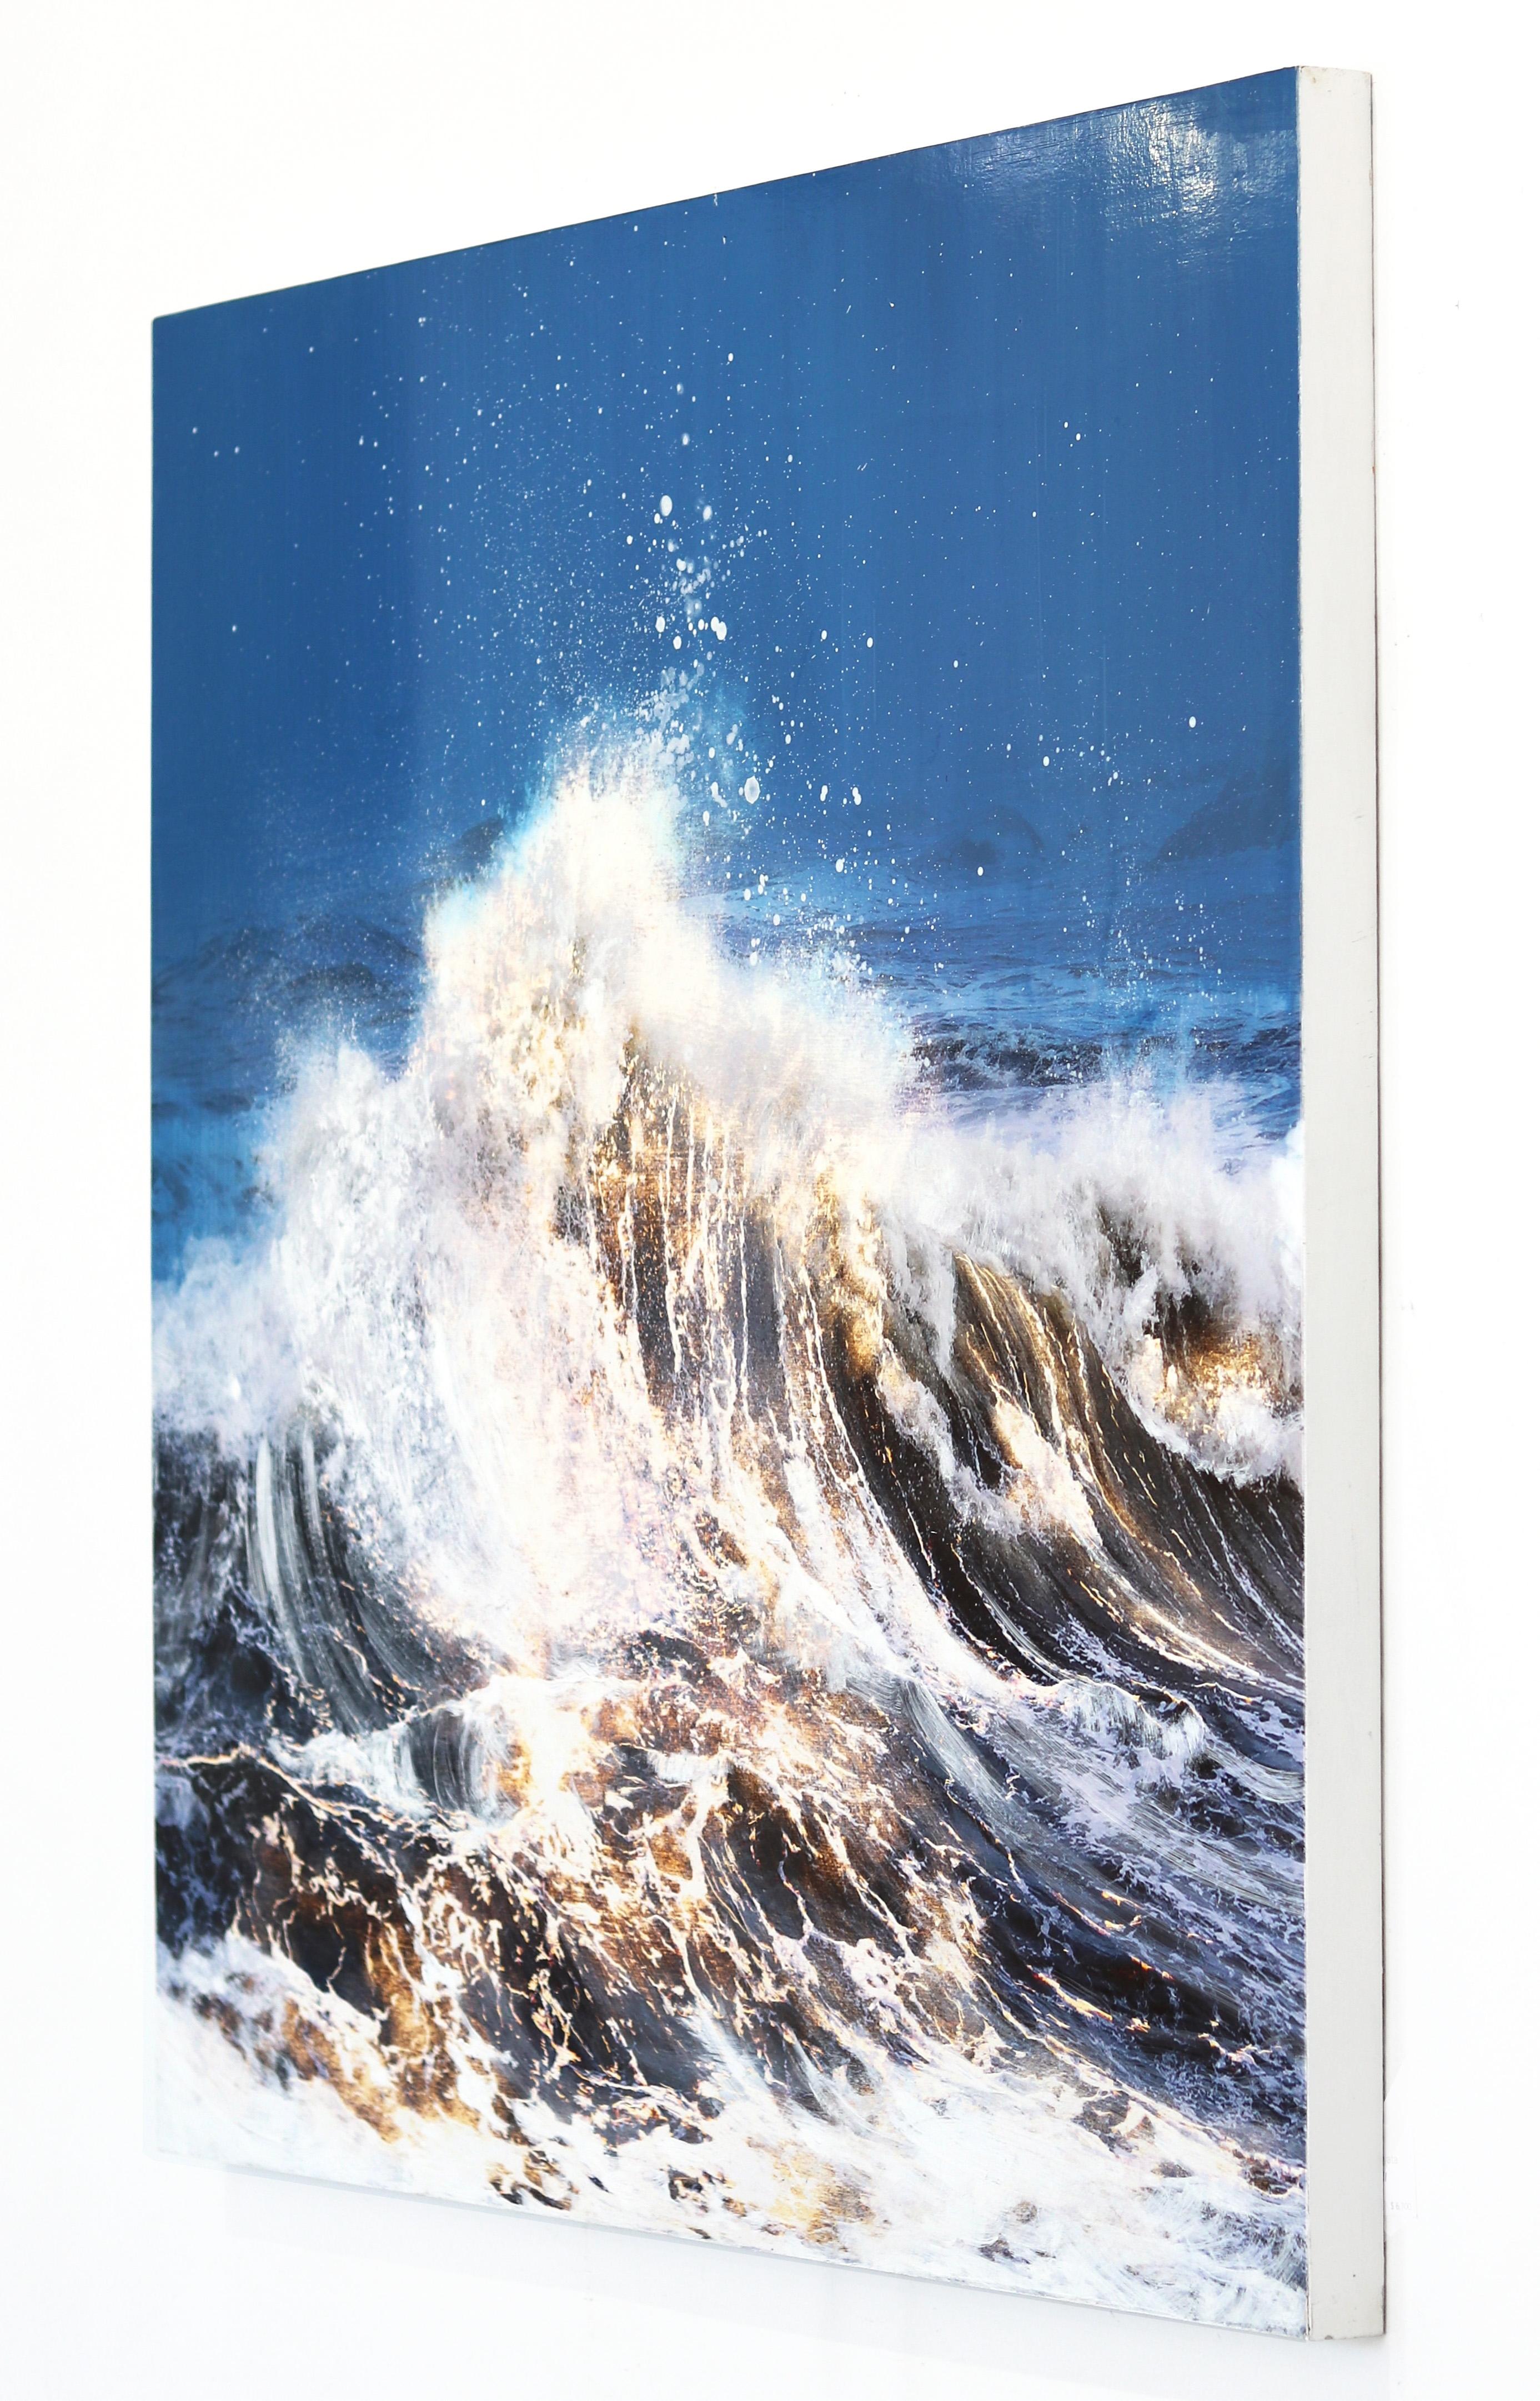 Untamed - Powerful Ocean Waves - Photorealist Mixed Media Art by Steven Nederveen